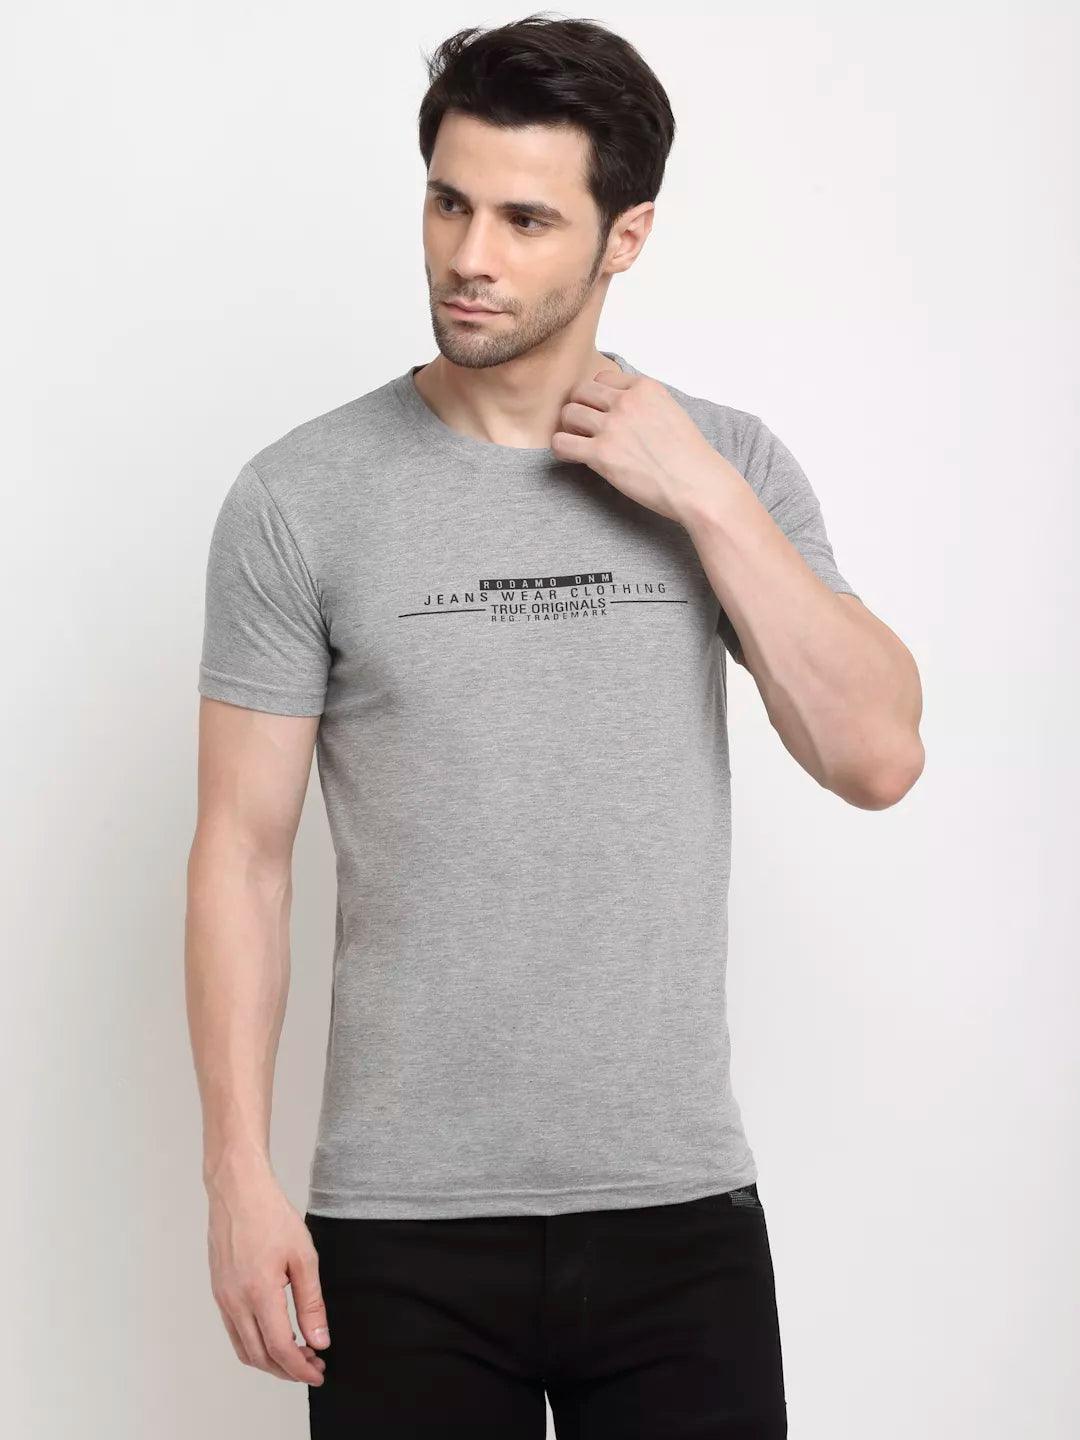 Rodamo Cotton Printed Gray T-Shirt (Medium) - ShopIMO